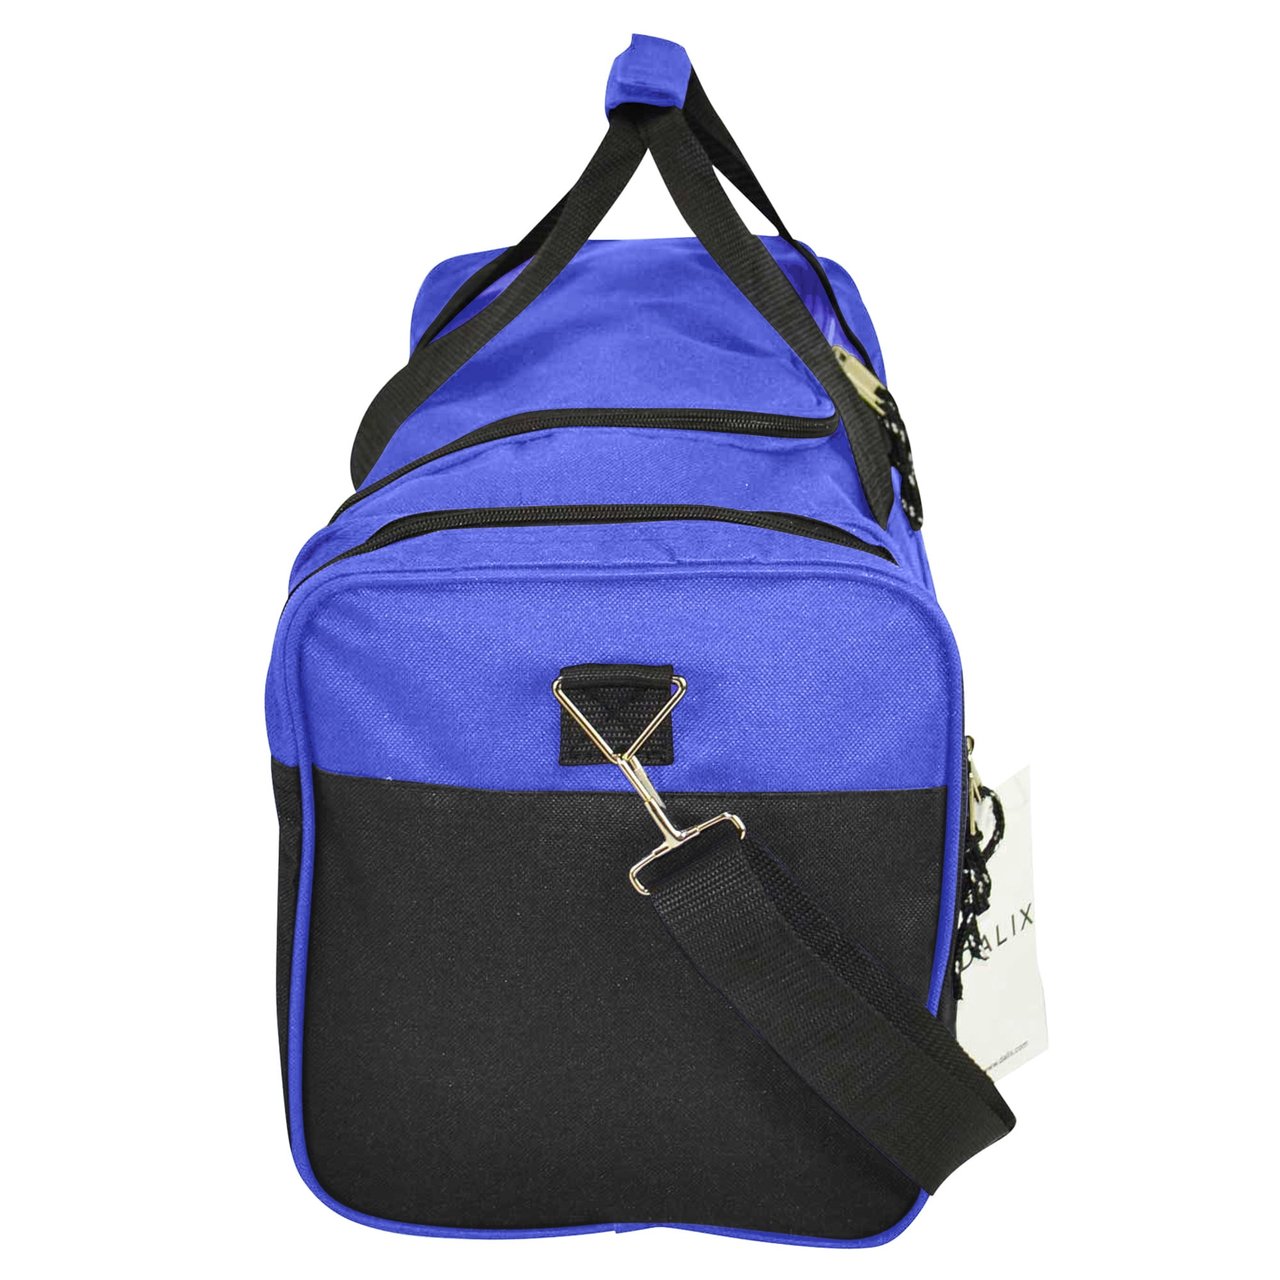 1 Blue DALIX 21 Blank Duffle Bag